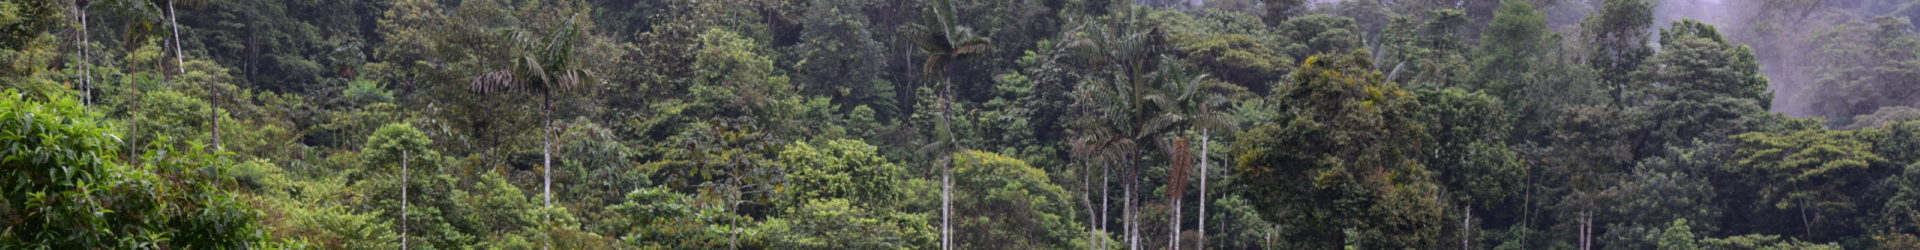 Podcast zum Regenwaldprojekt